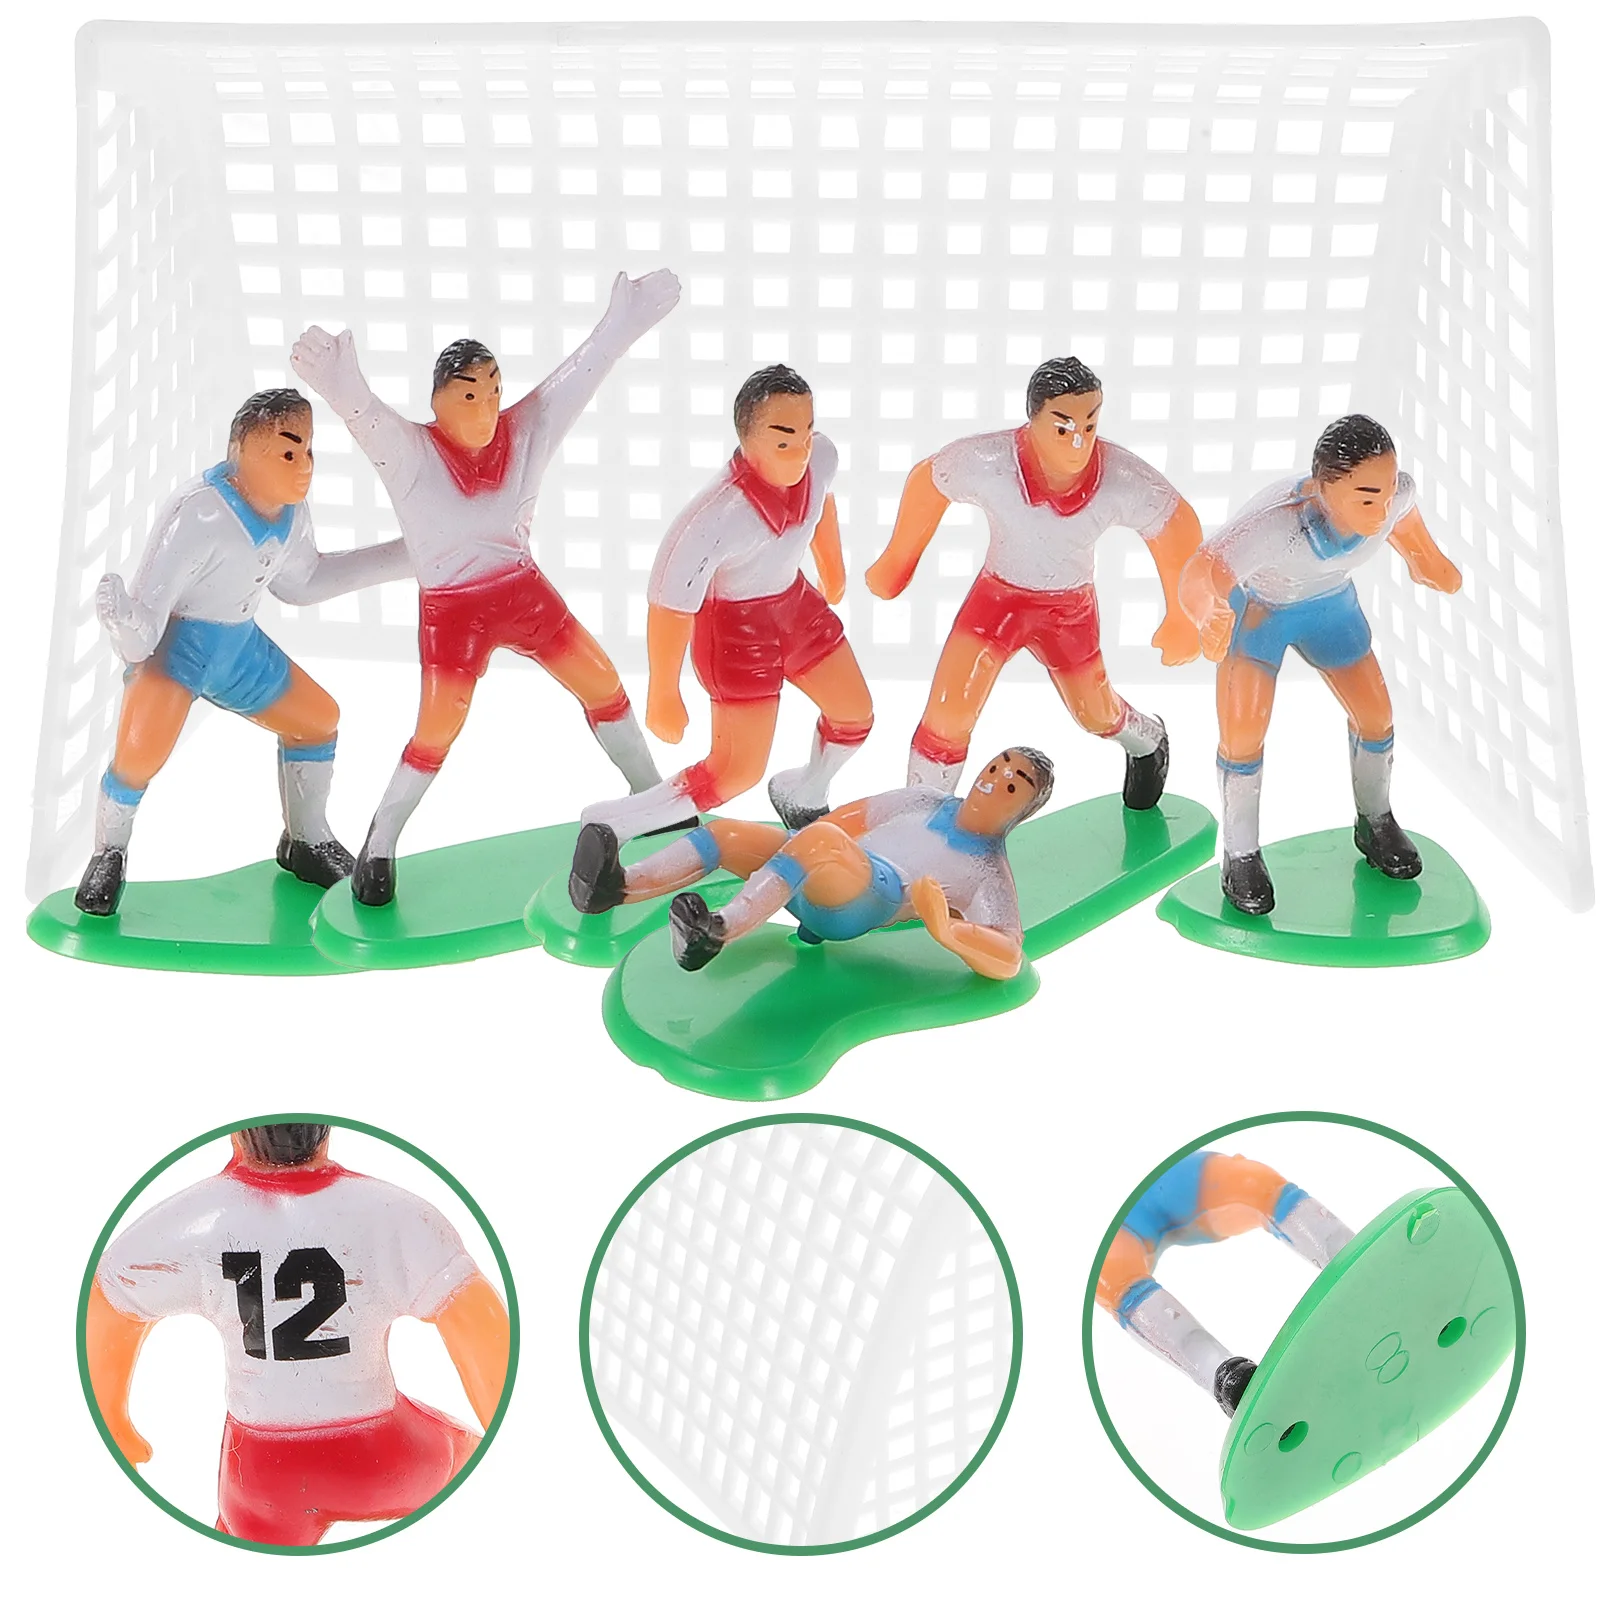 

16 Pcs Soccer Ball Cake Topper Sports Cupcake Picks Mini Figurine Football Party Decor Bath Toys Babies Figirine Toppers